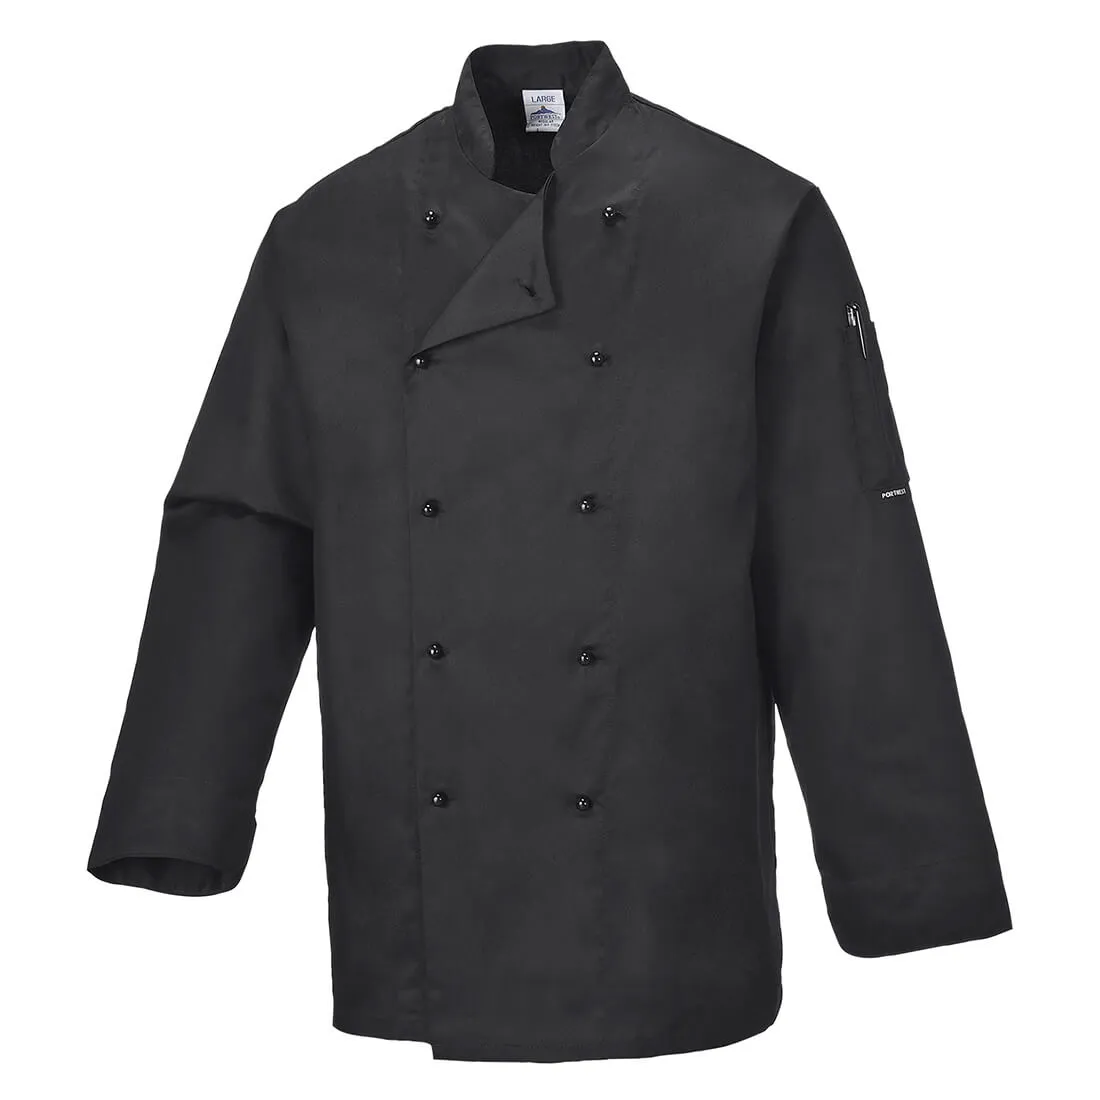 Portwest Unisex Somerset Chefs Jacket - Black, S